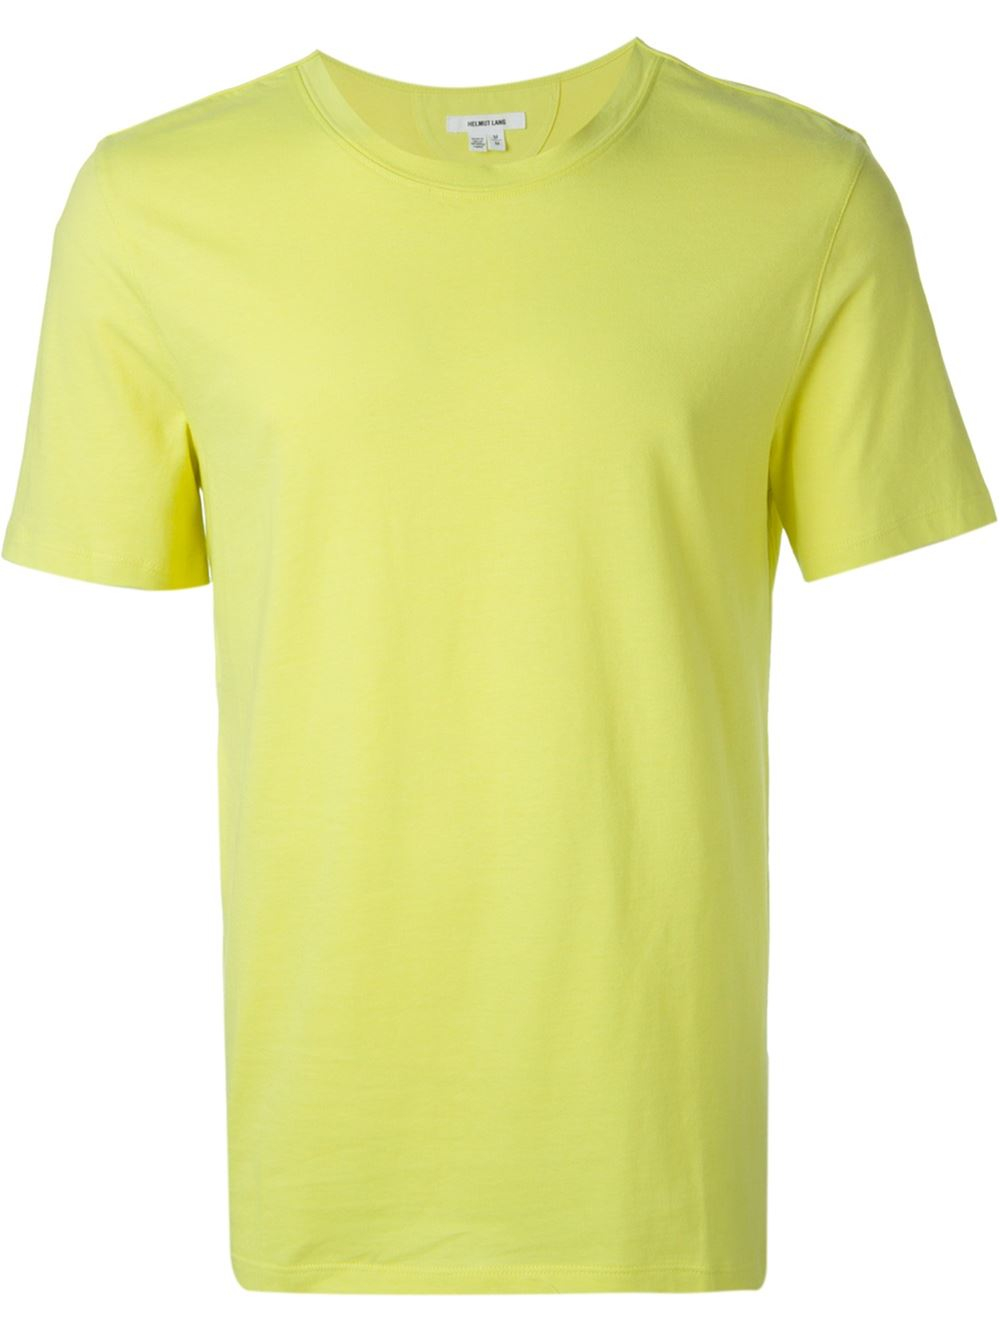 Helmut Lang Crew Neck T-Shirt in Yellow for Men (yellow & orange) | Lyst